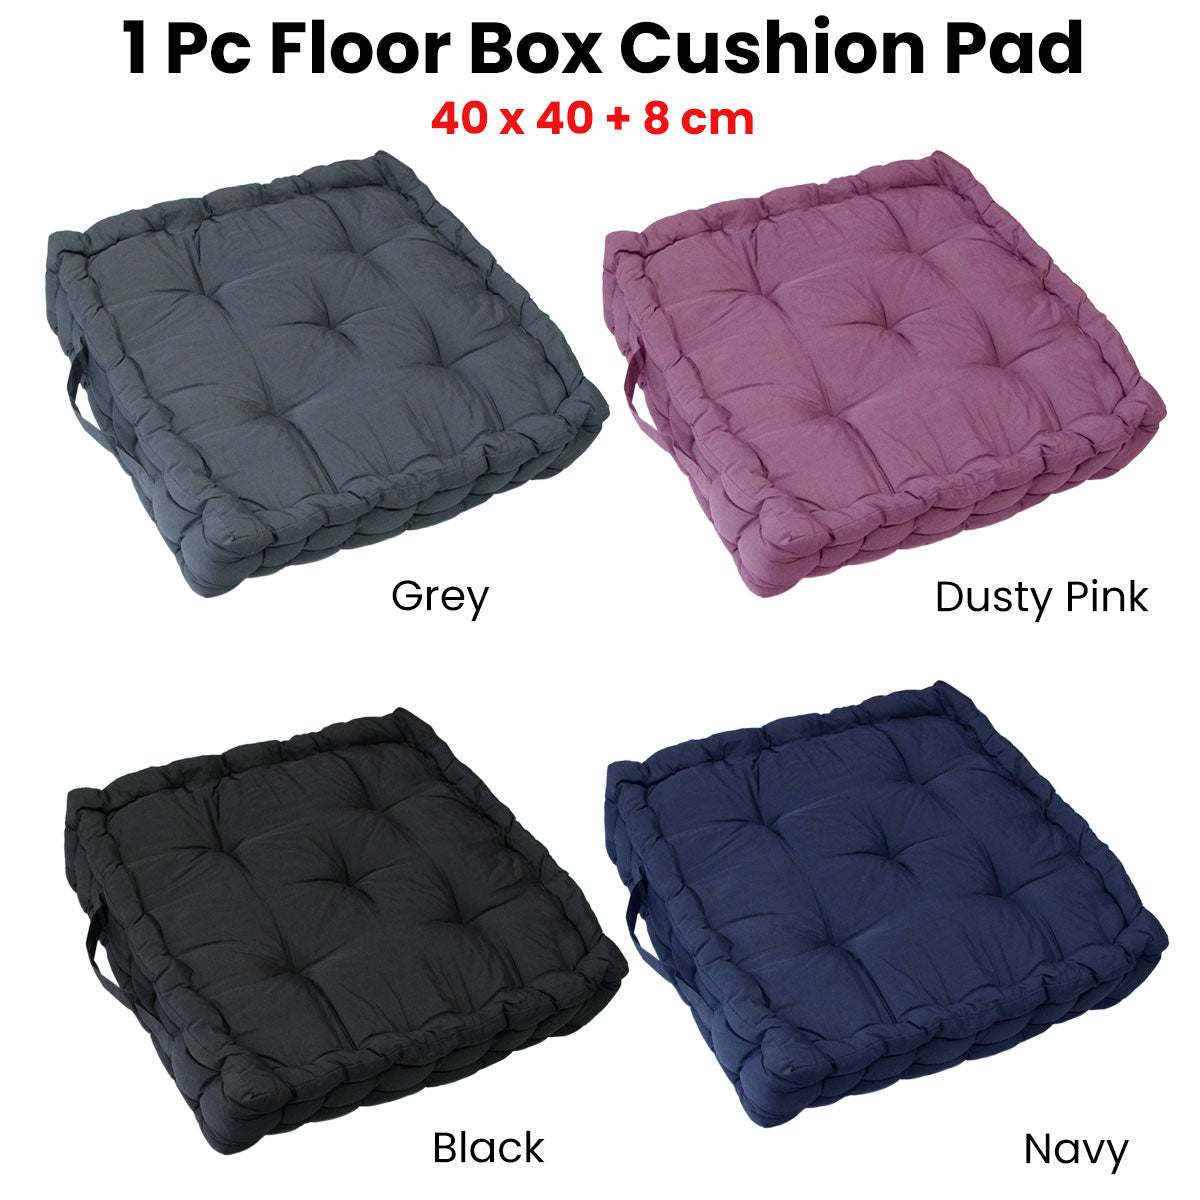 1 Pc Floor Box Cushion Pad 40 x 40+ 8 cm Navy